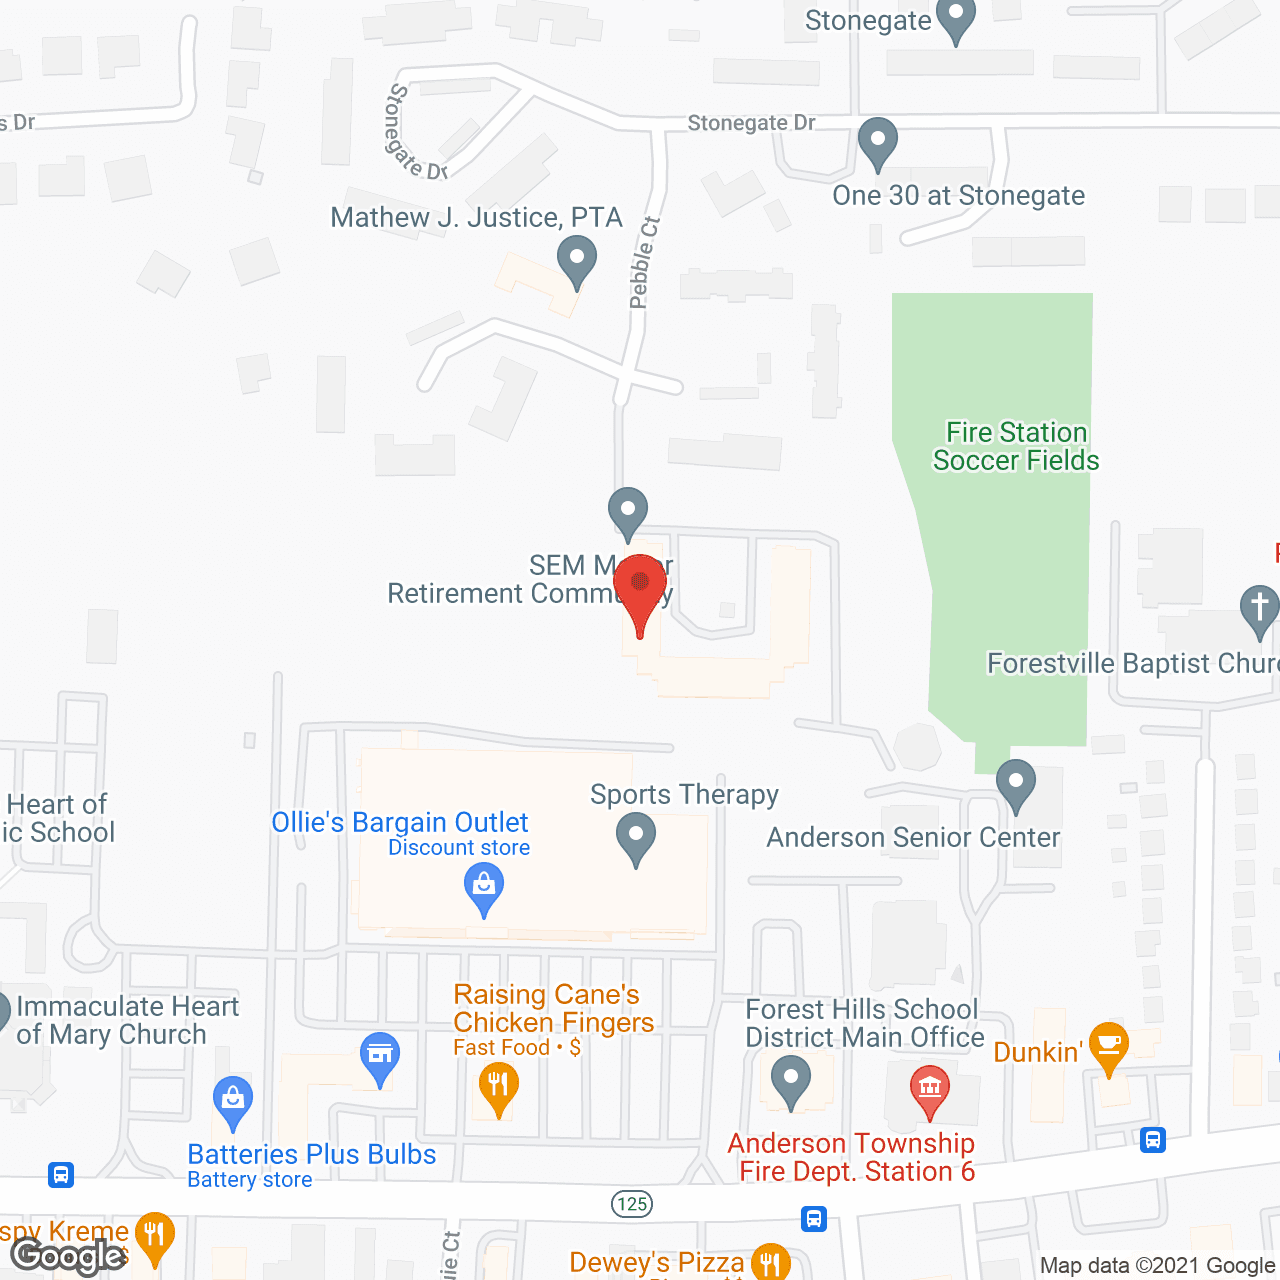 SEM Manor in google map